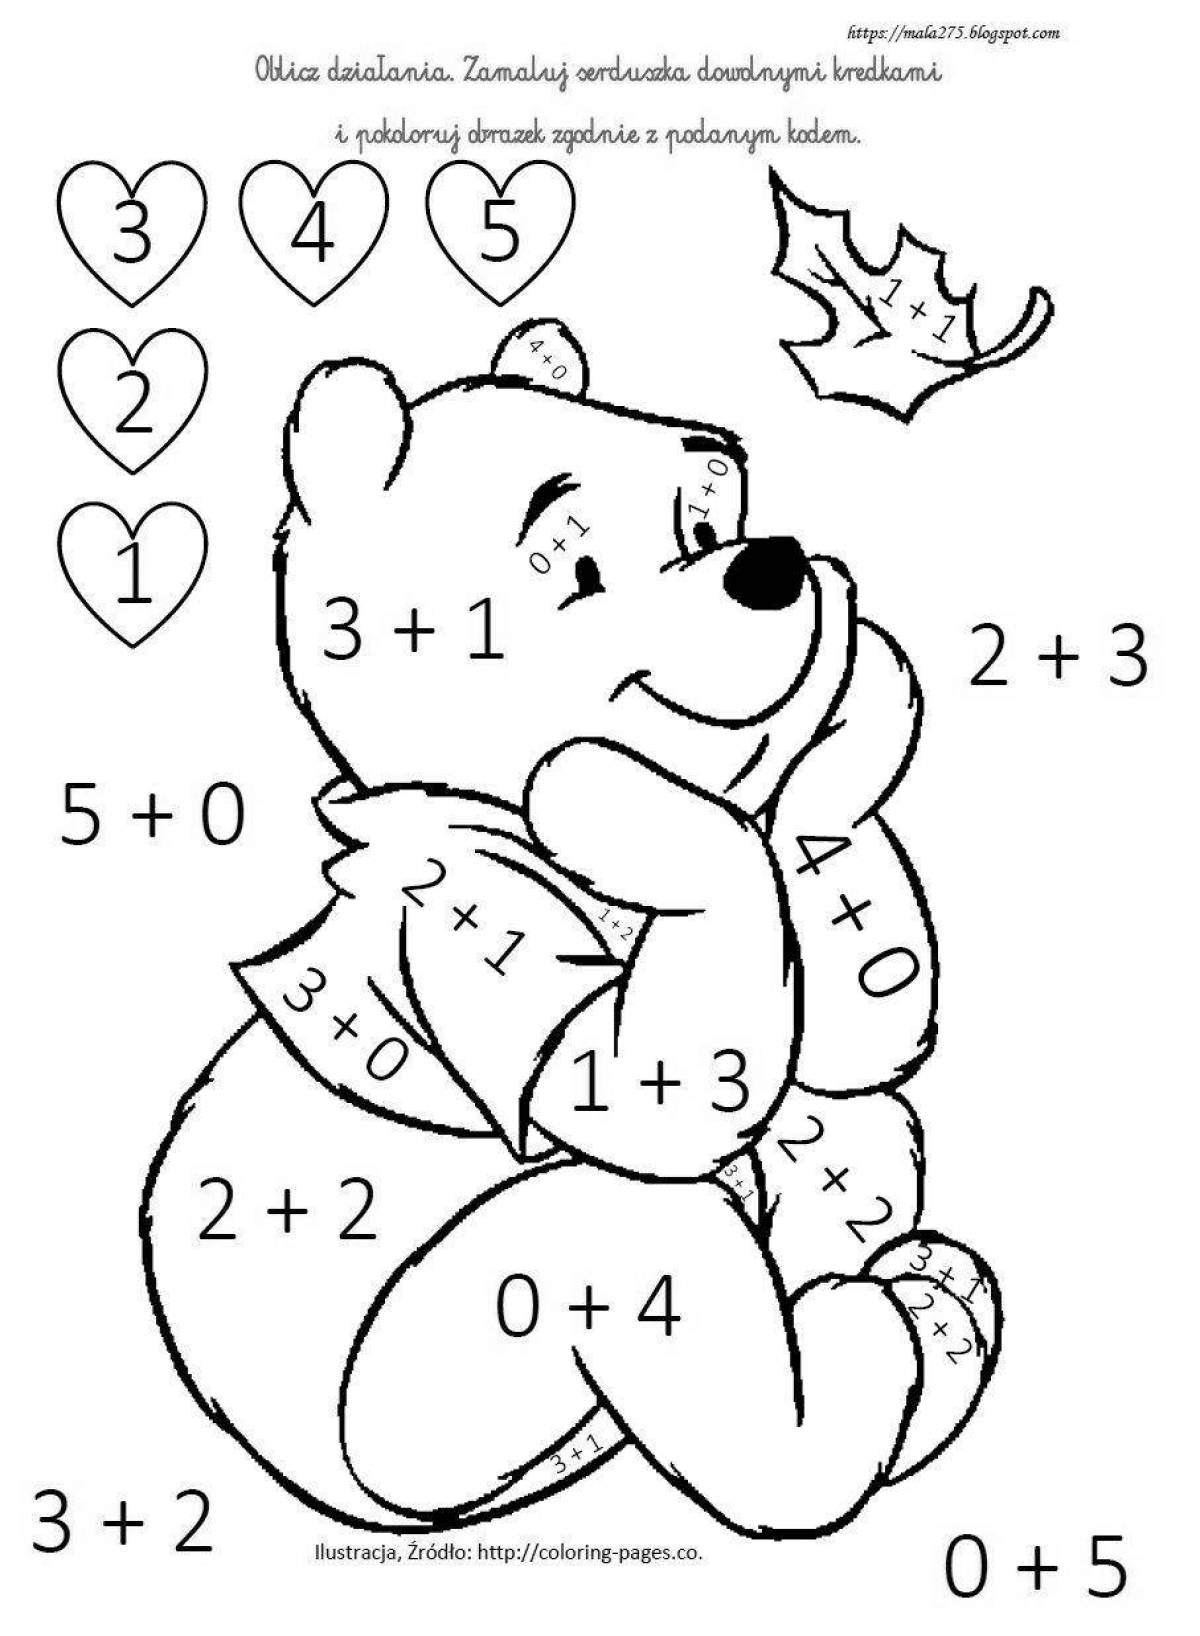 Creative math coloring book for preschoolers